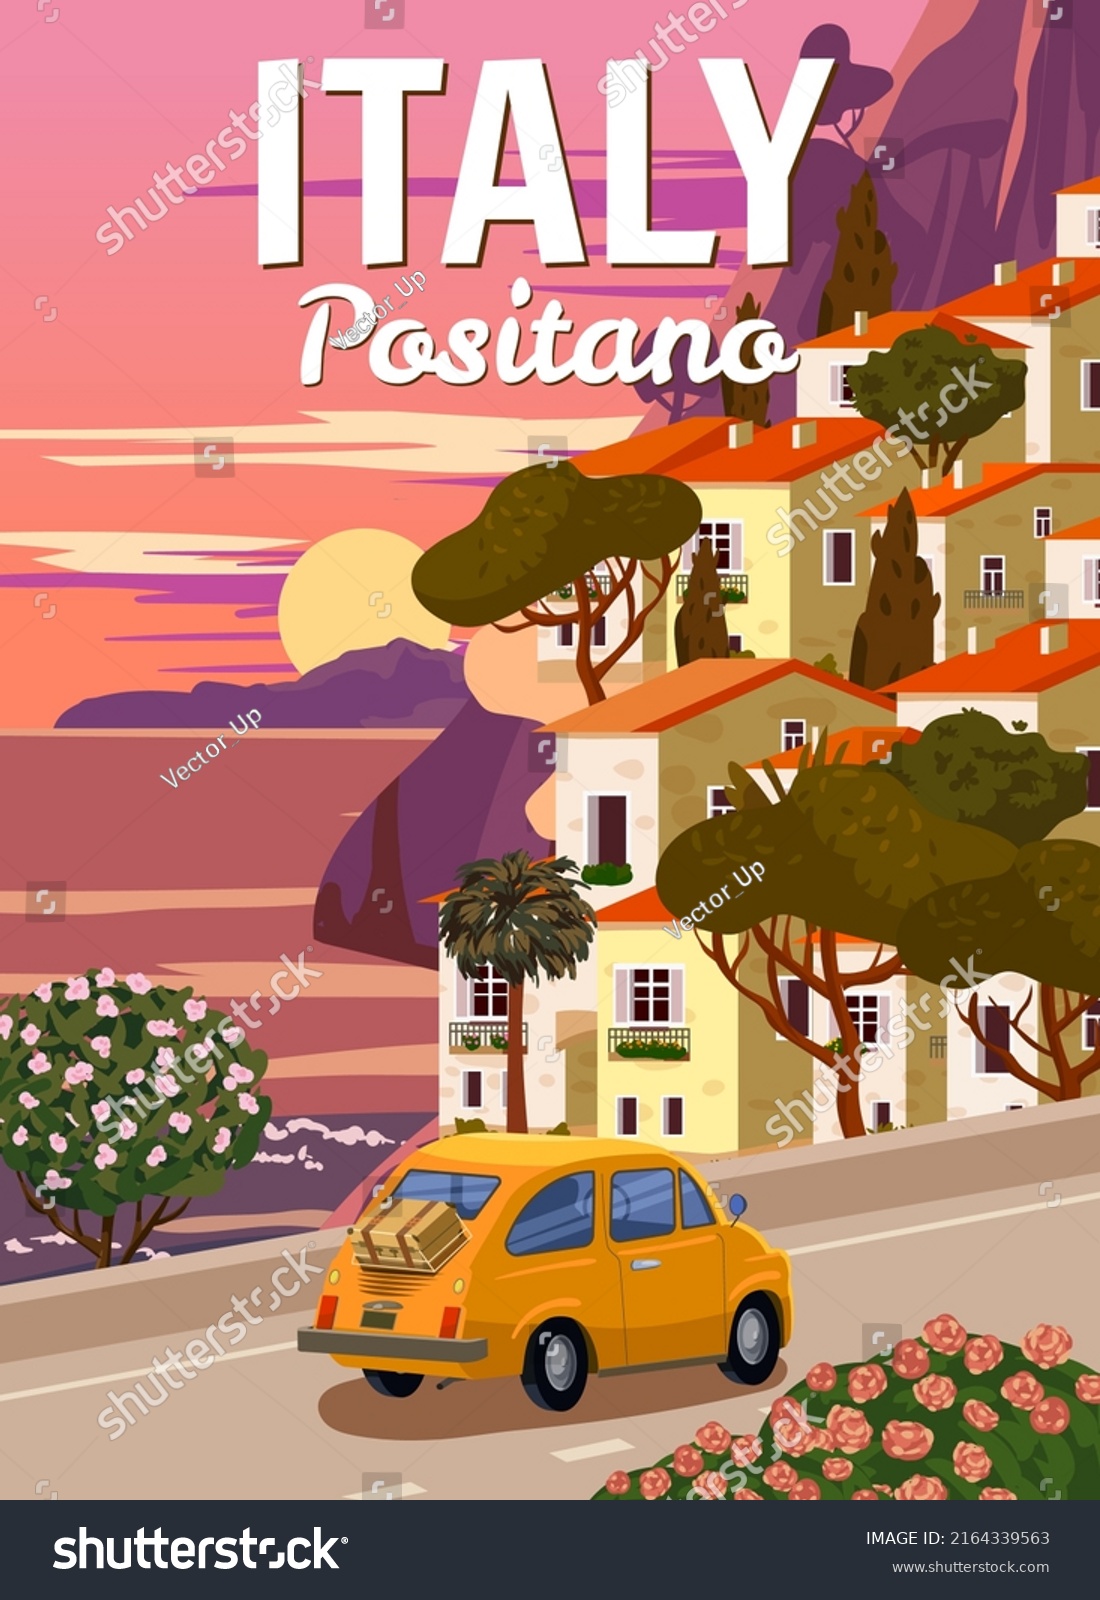 SVG of Retro Poster Italy, Positano resort, Amalfi coast. Road retro car, mediterranean romantic landscape, mountains, seaside town, sailboat, sea. Retro travel poster svg